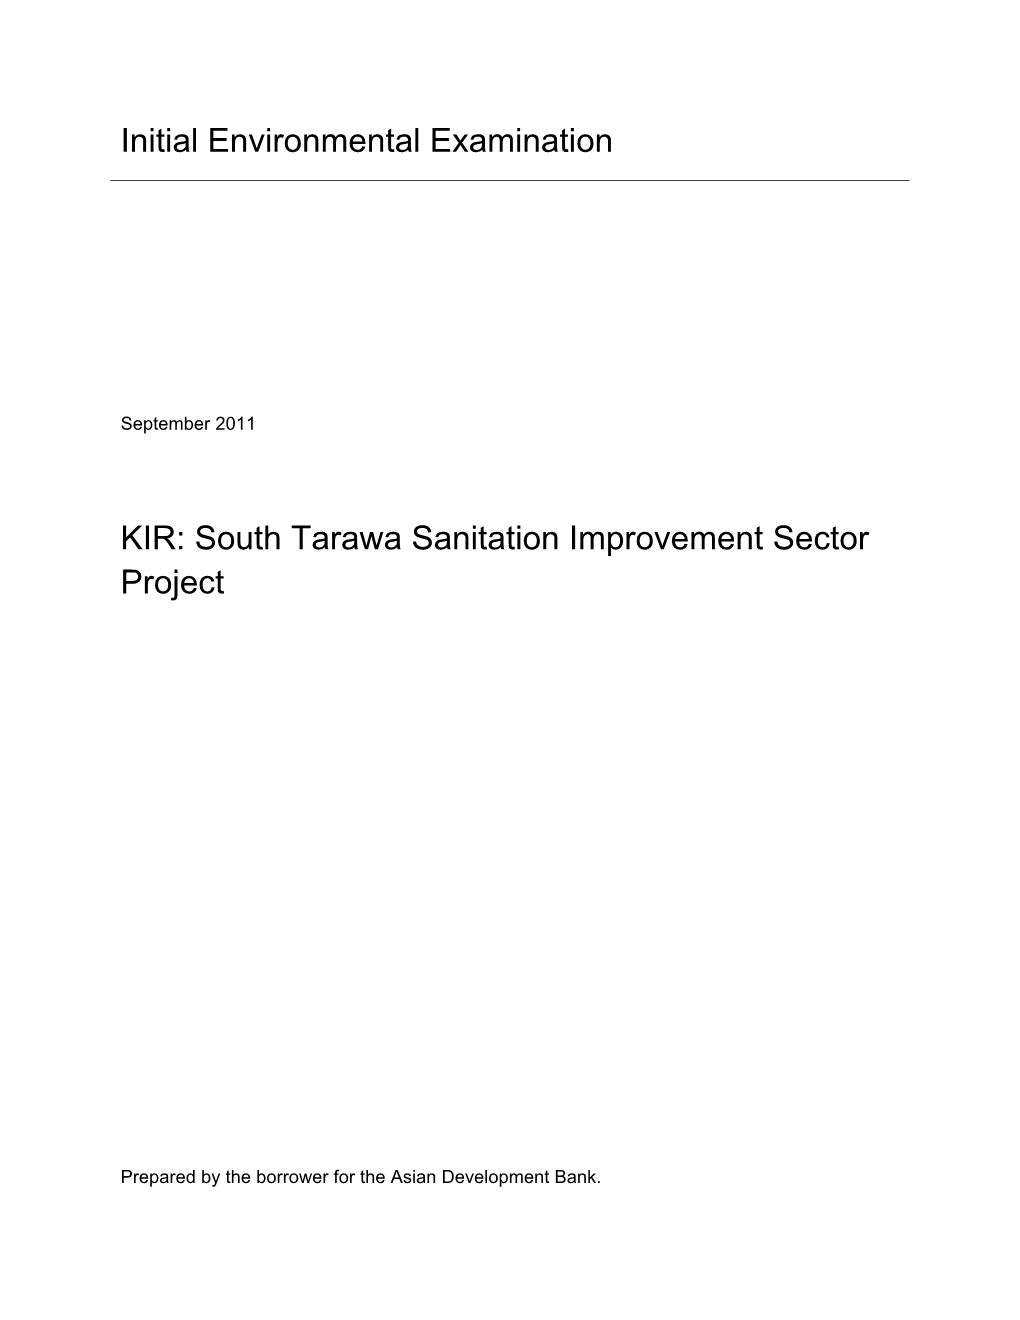 IEE: Kiribati: South Tarawa Sanitation Improvement Sector Project (As Of